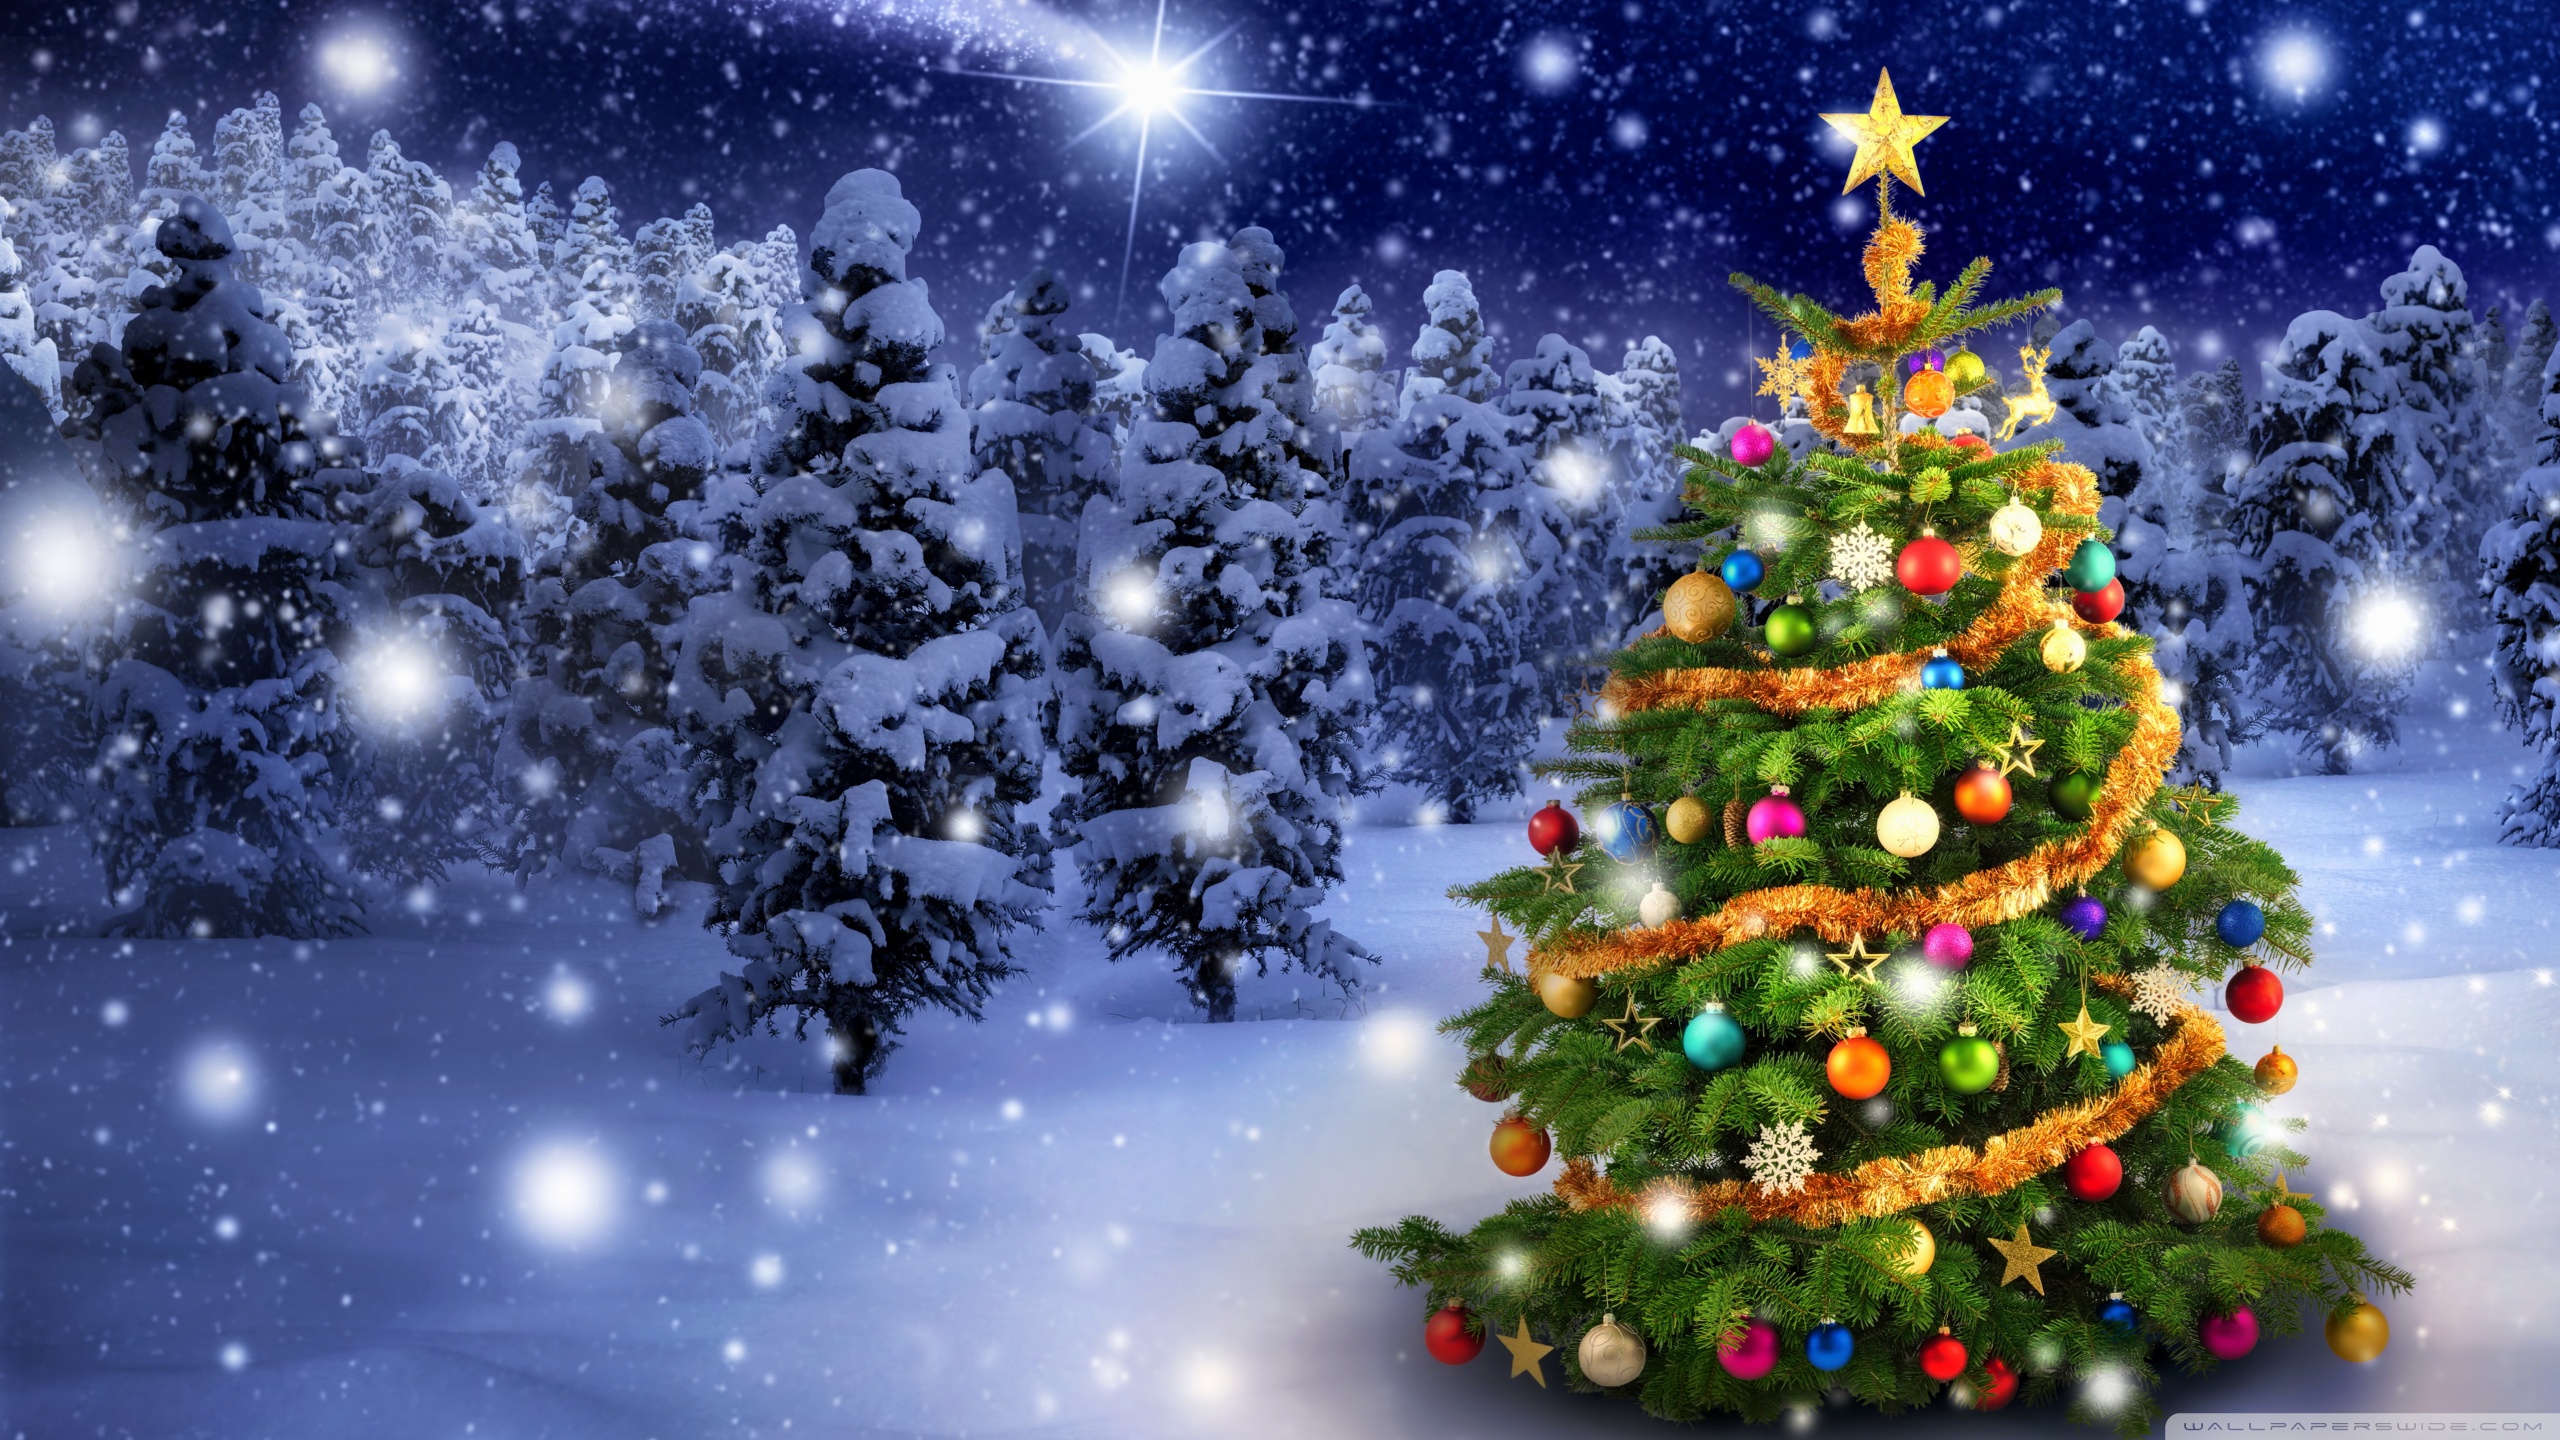 Beautiful Outdoor Christmas Tree Ultra HD Desktop Background Wallpaper ...